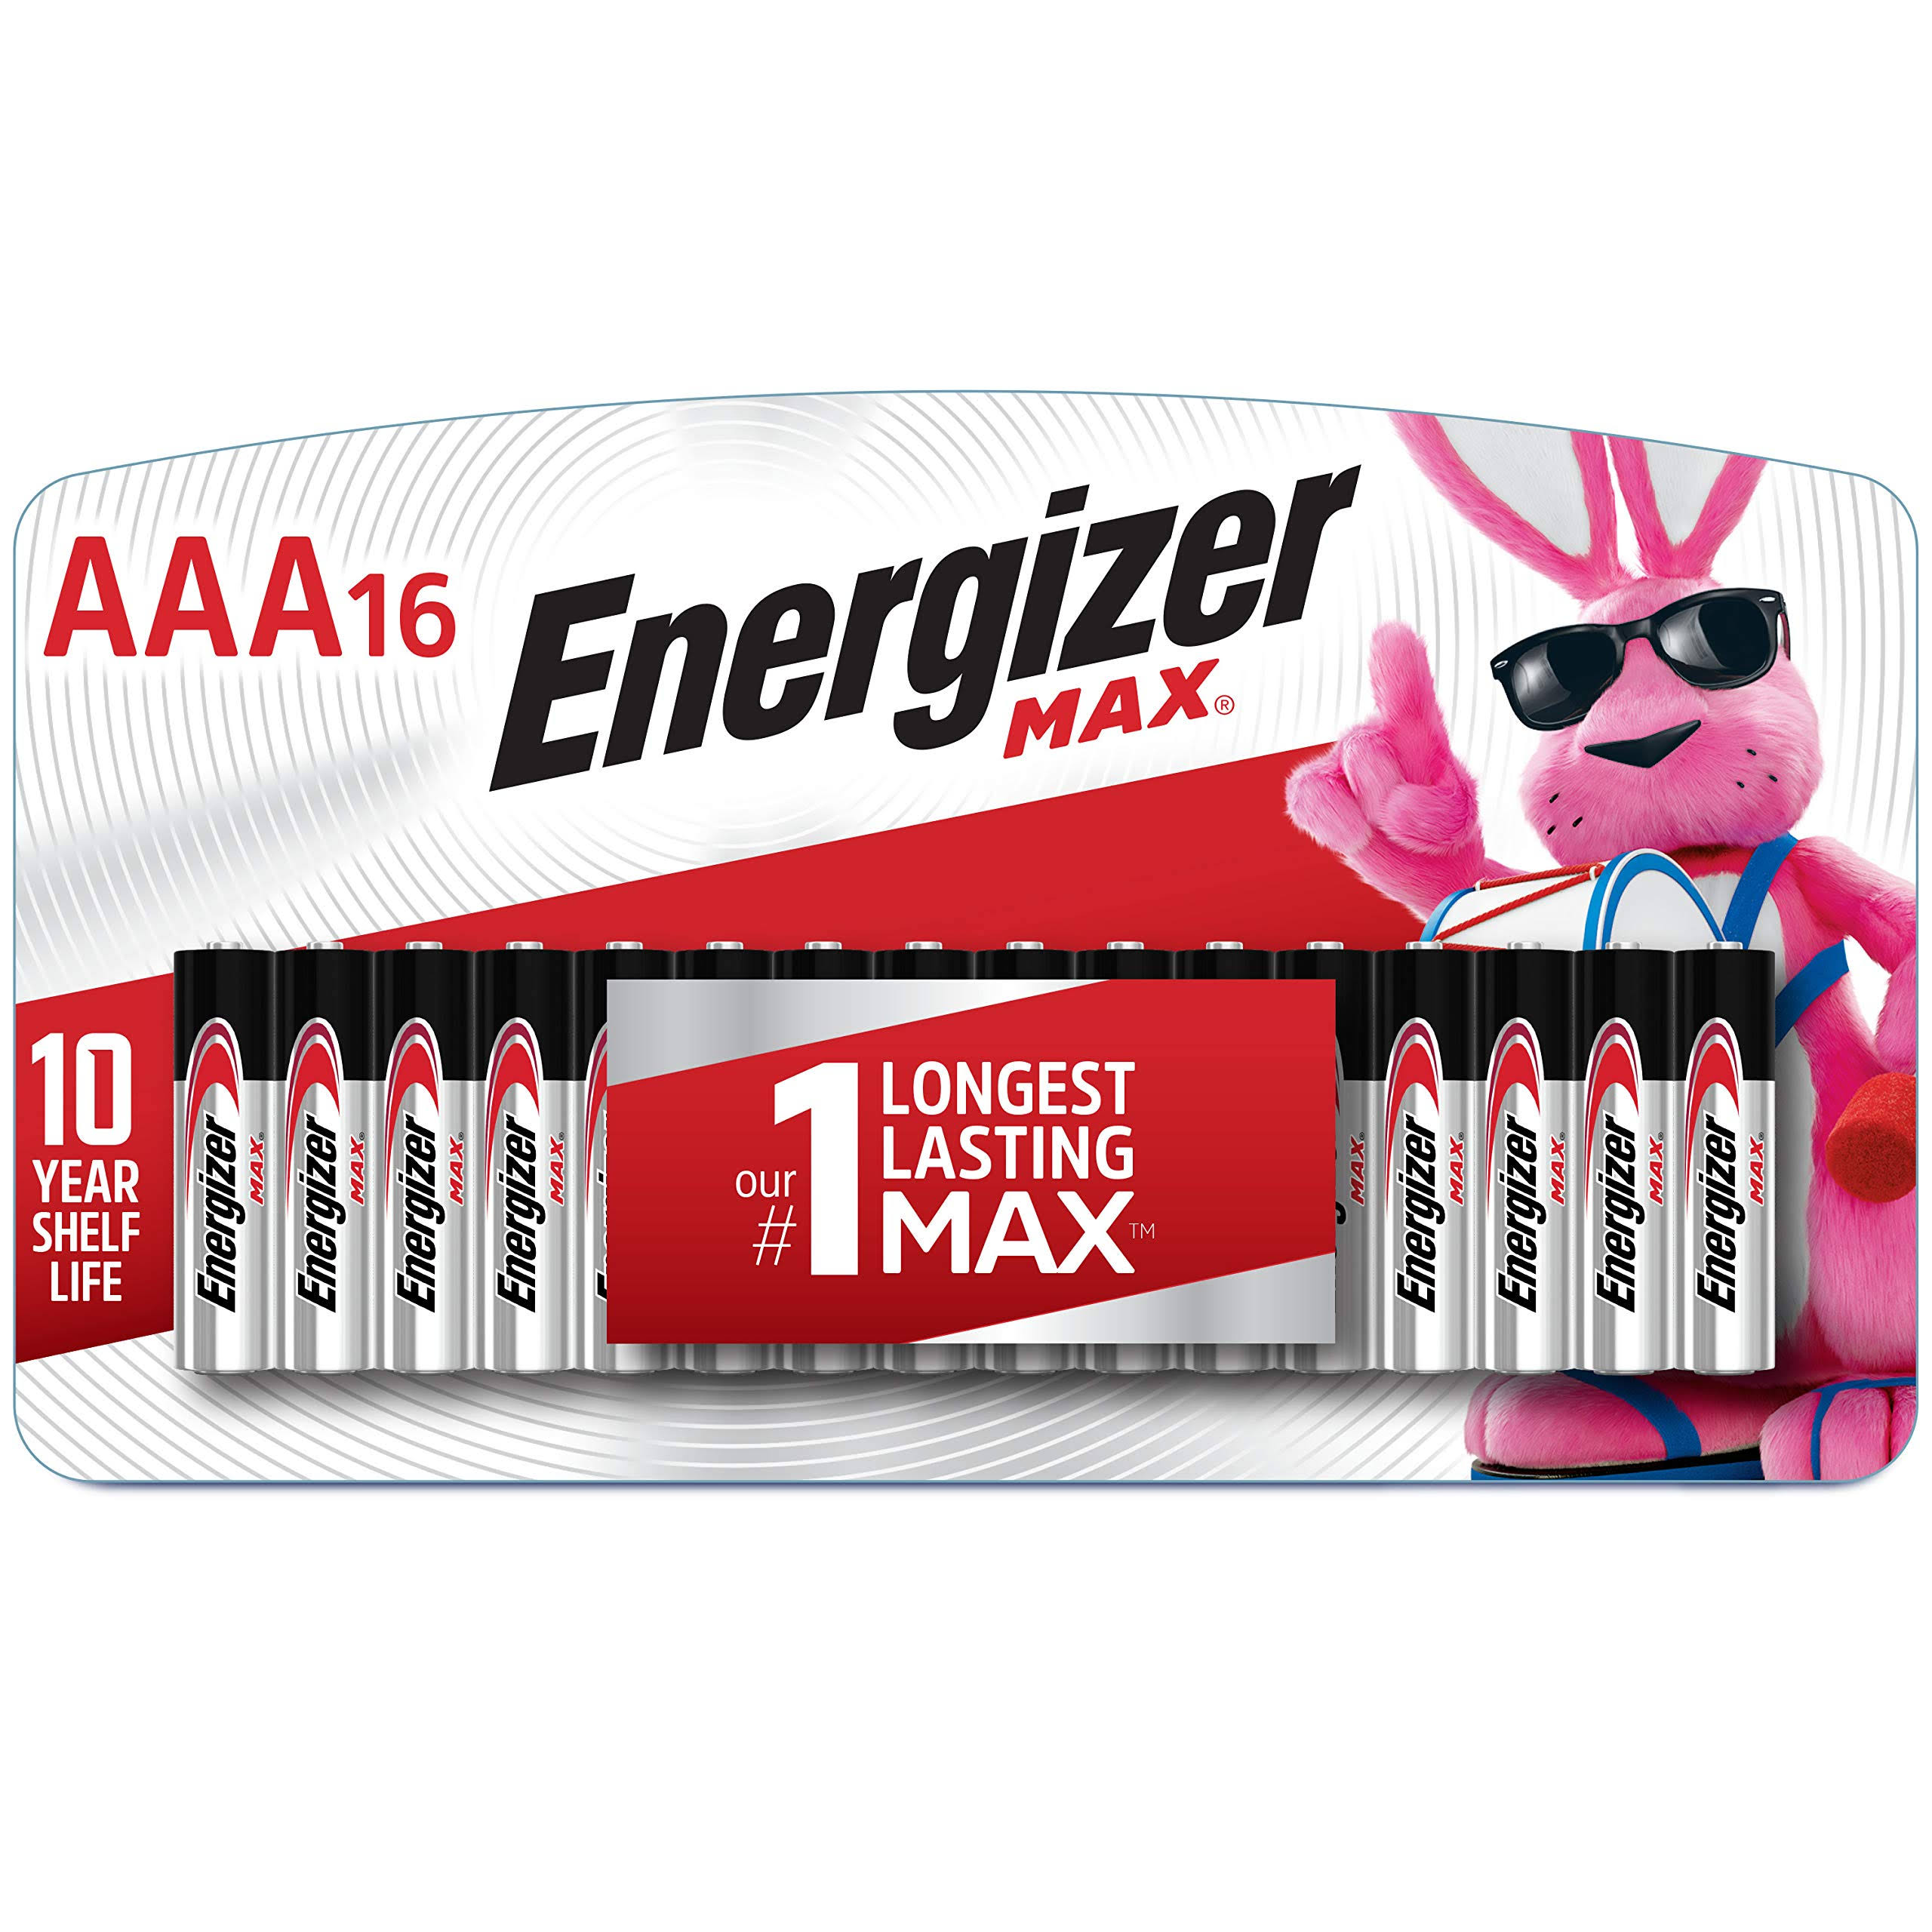 Energizer Max Batteries - 16pk, 1.5V, AAA, Alkaline